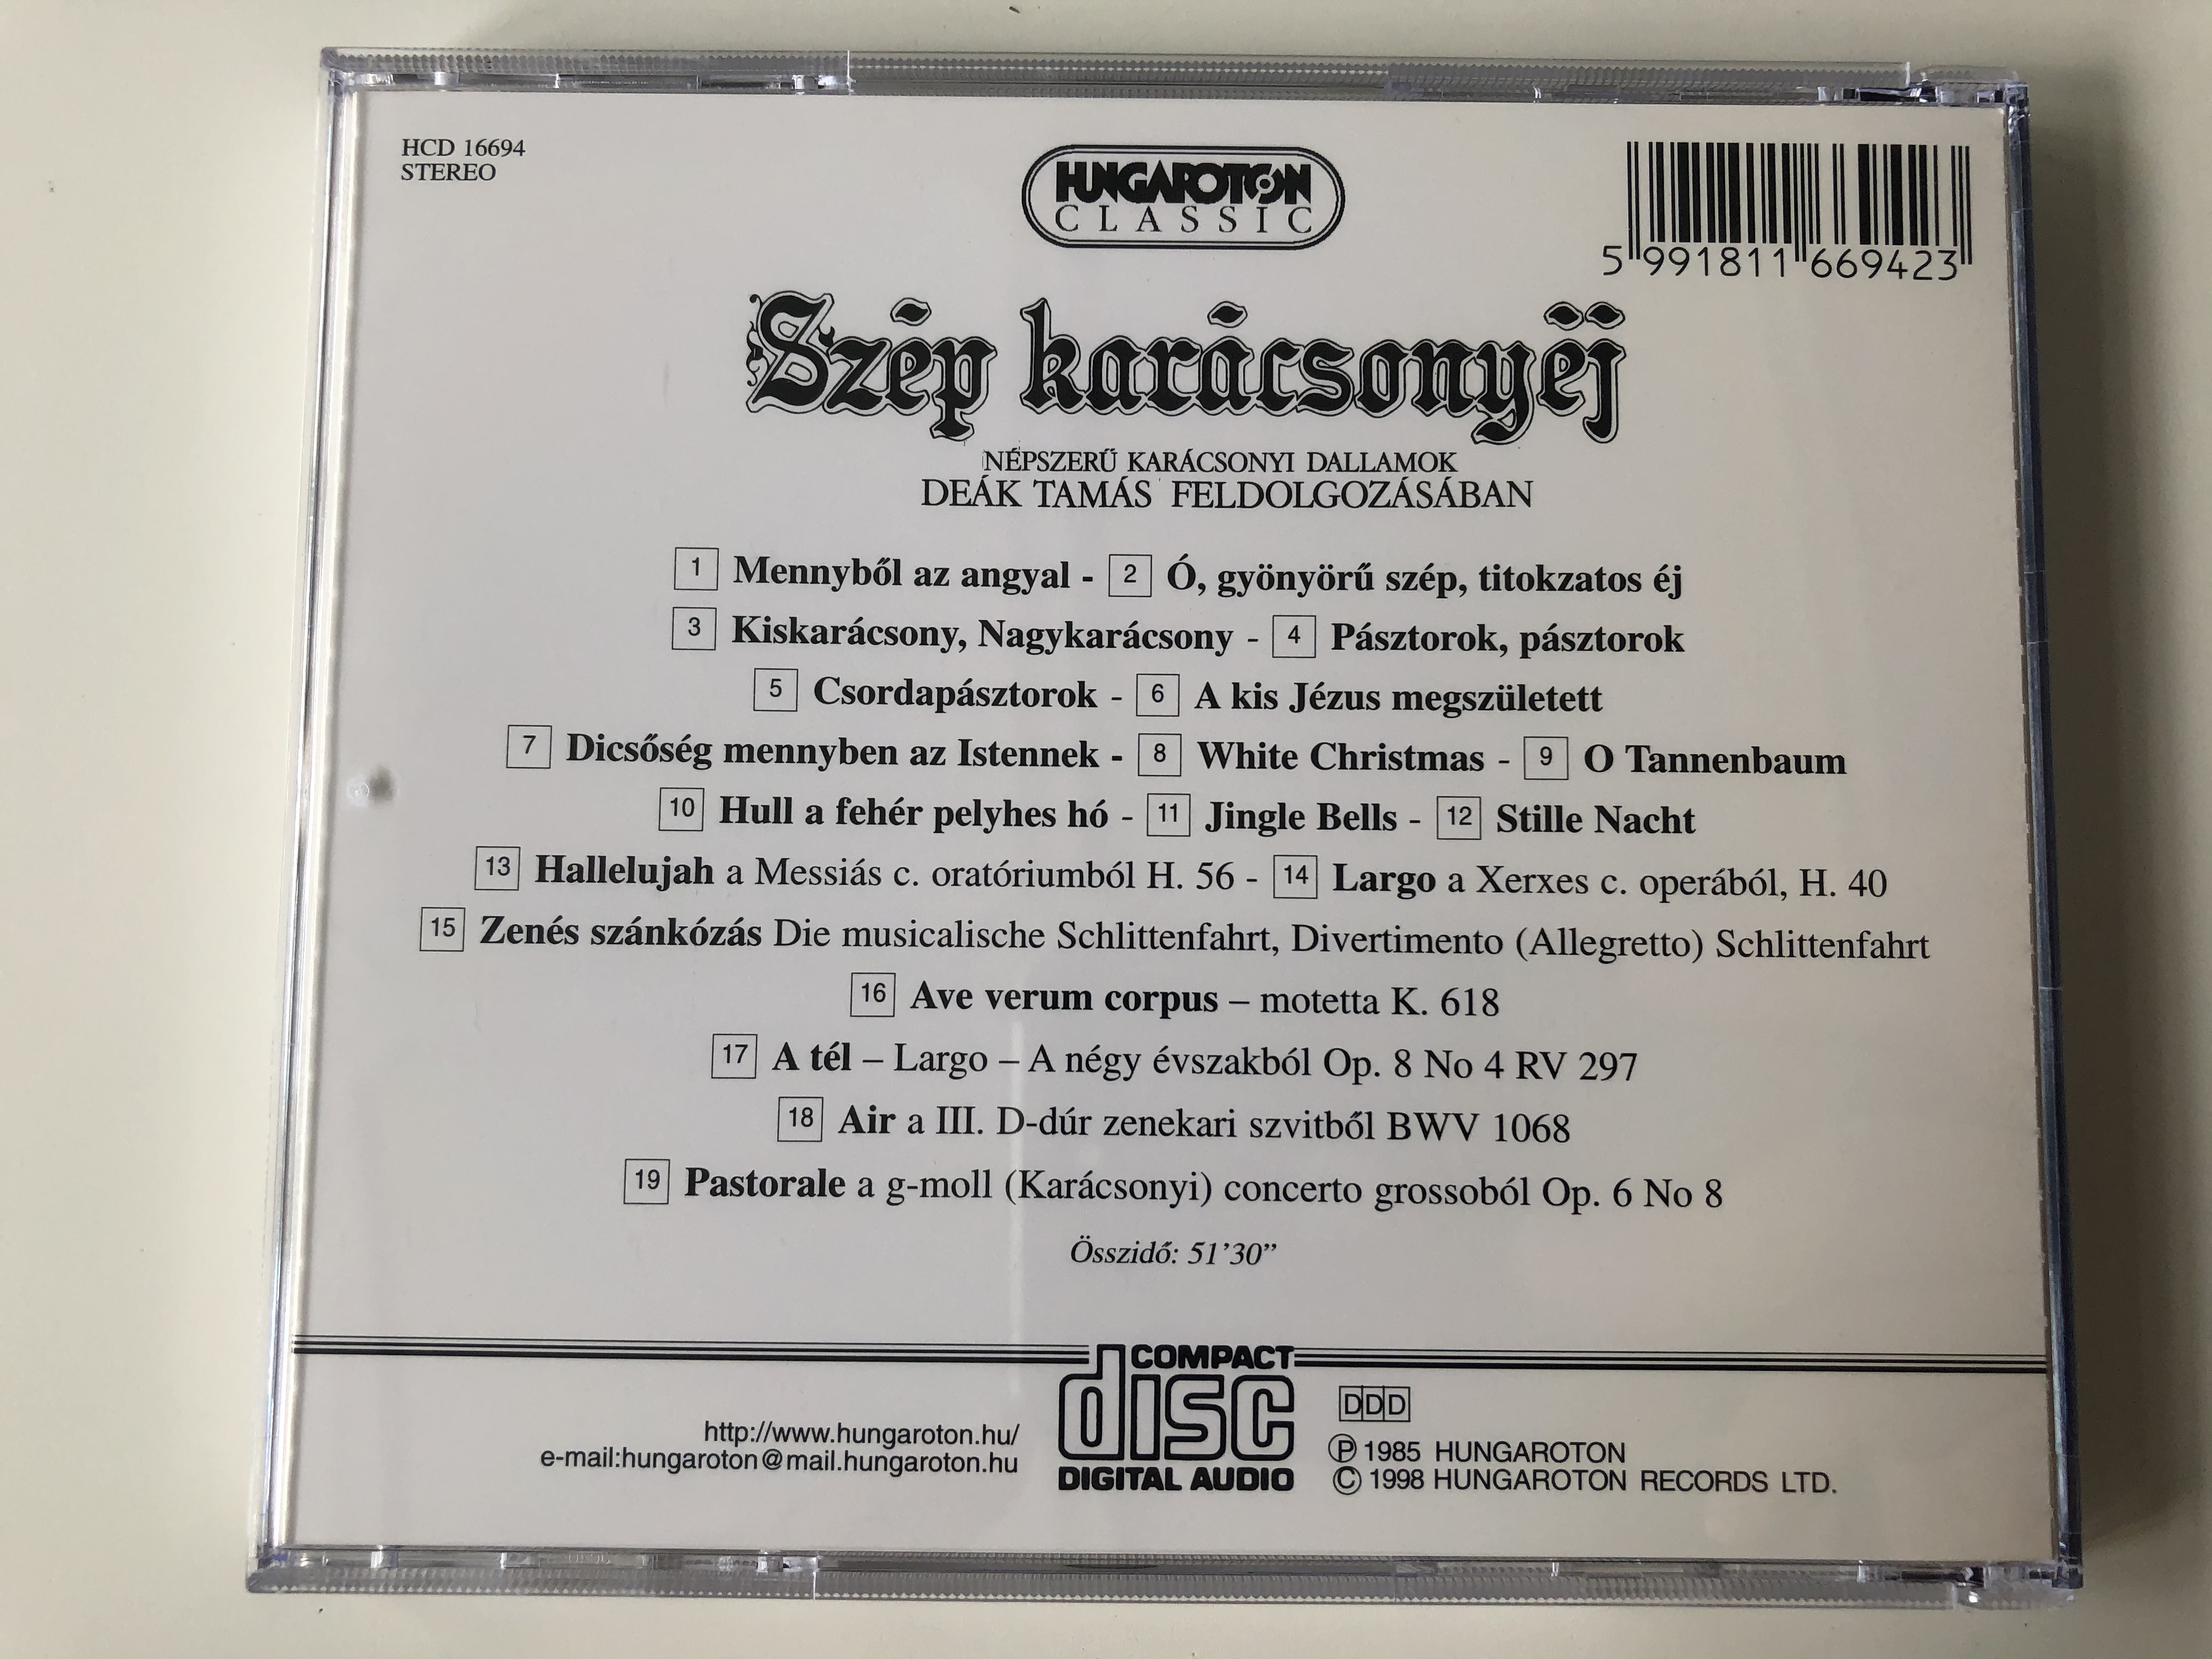 sz-p-kar-csony-j-n-pszer-kar-csonyi-dallamok-de-k-tam-s-feldolgoz-s-ban-hungaroton-classic-audio-cd-1998-stereo-hcd-16694-5-.jpg